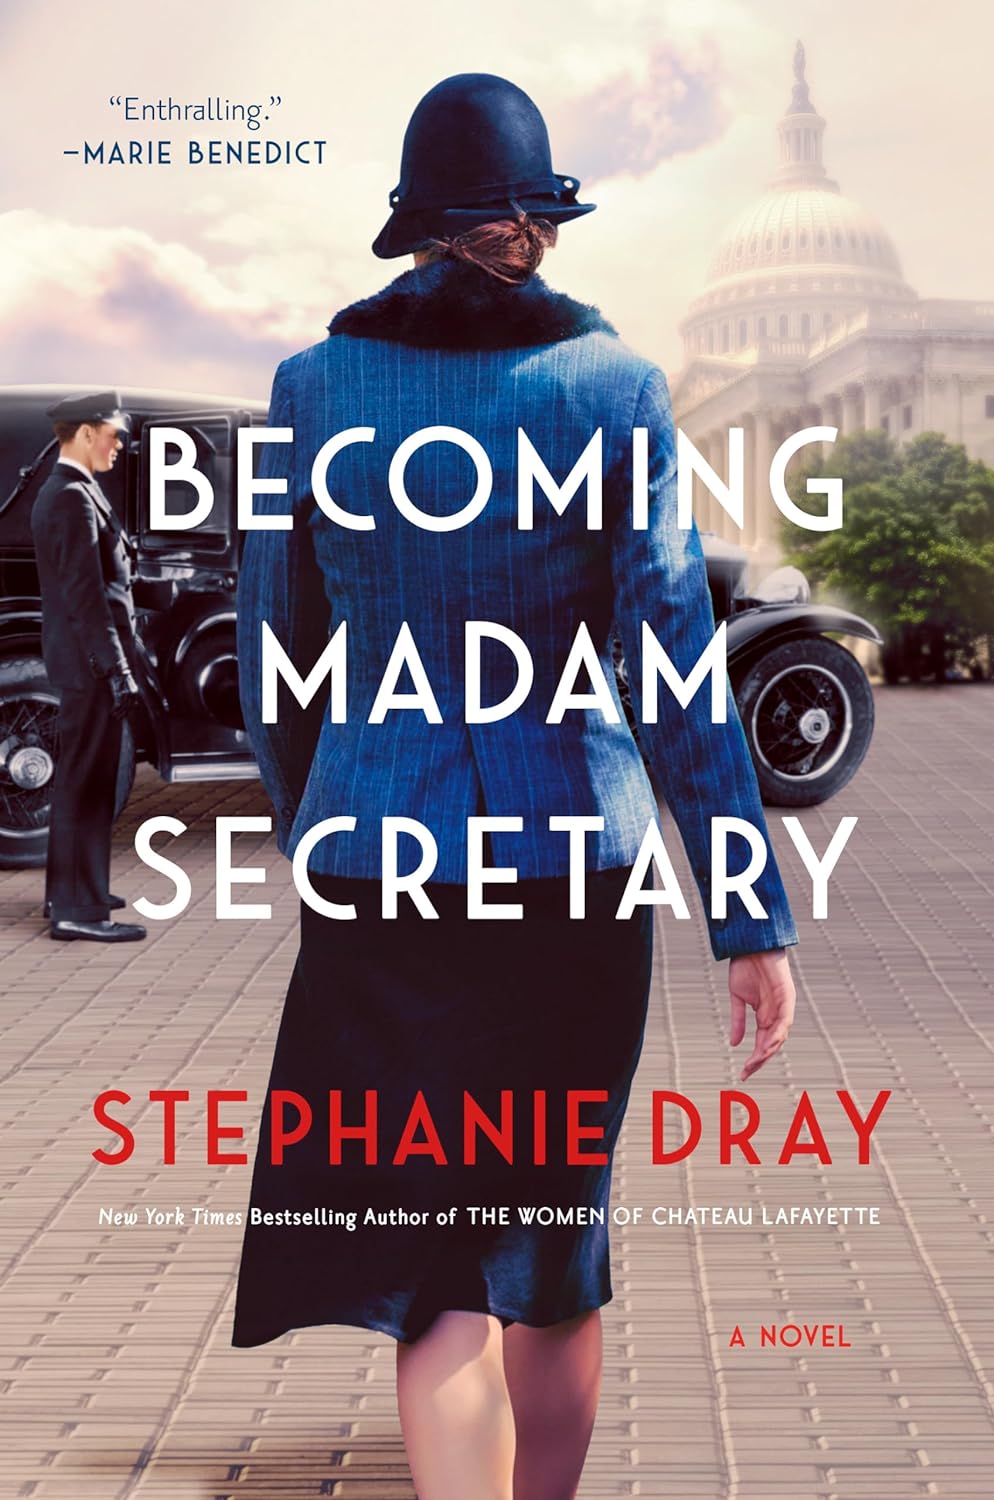 Becoming Madam Secretary by Stephanie Dray